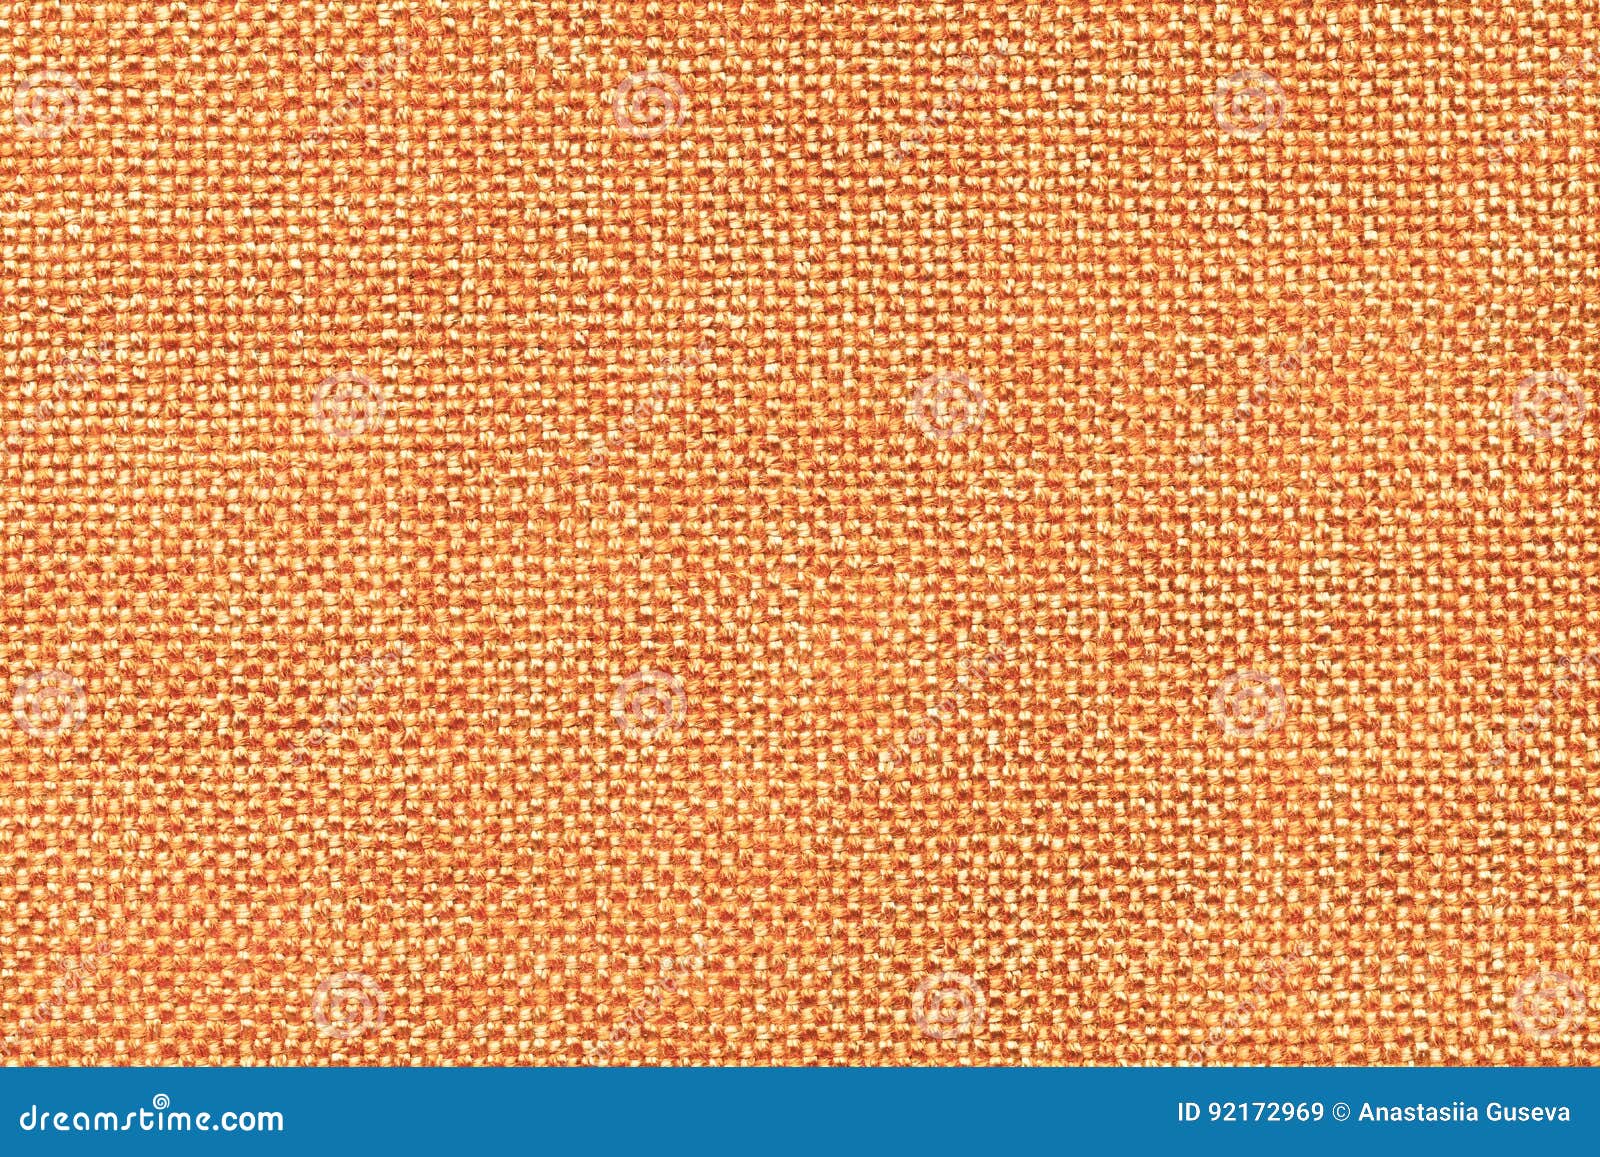 Orange Textile Background Closeup. Structure of the Fabric Macro Stock ...